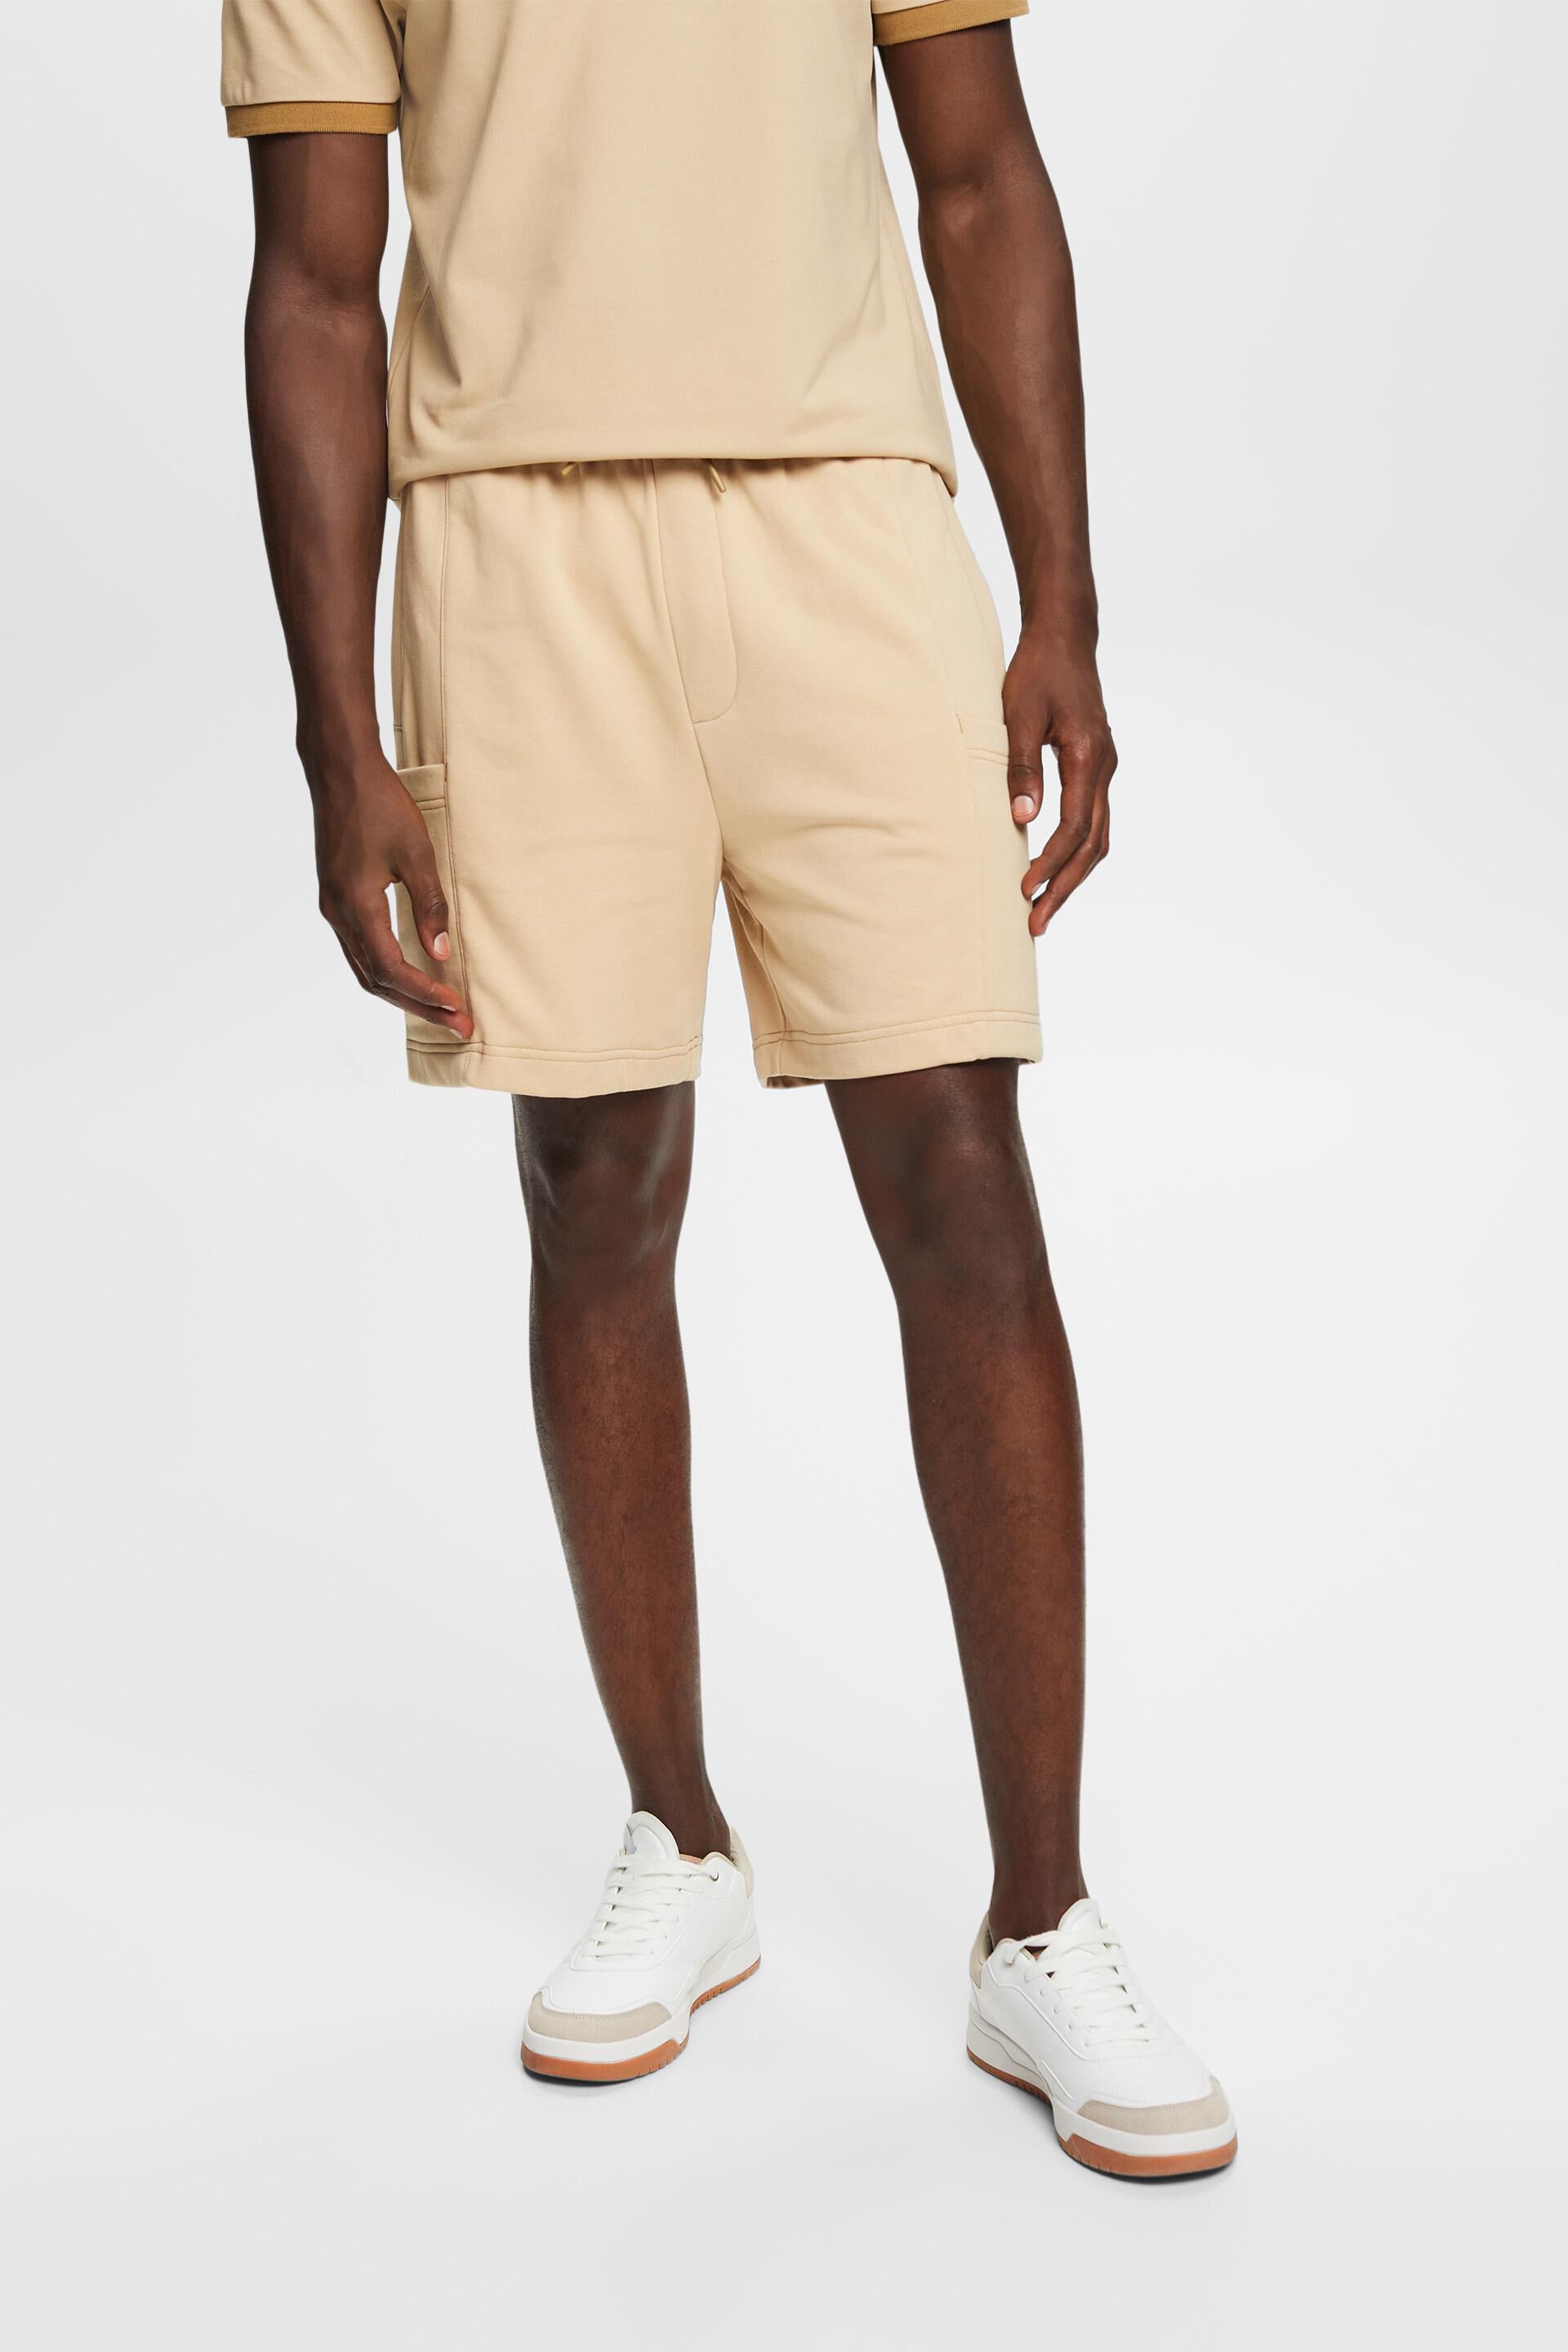 Esprit Bikini Jogger-style shorts